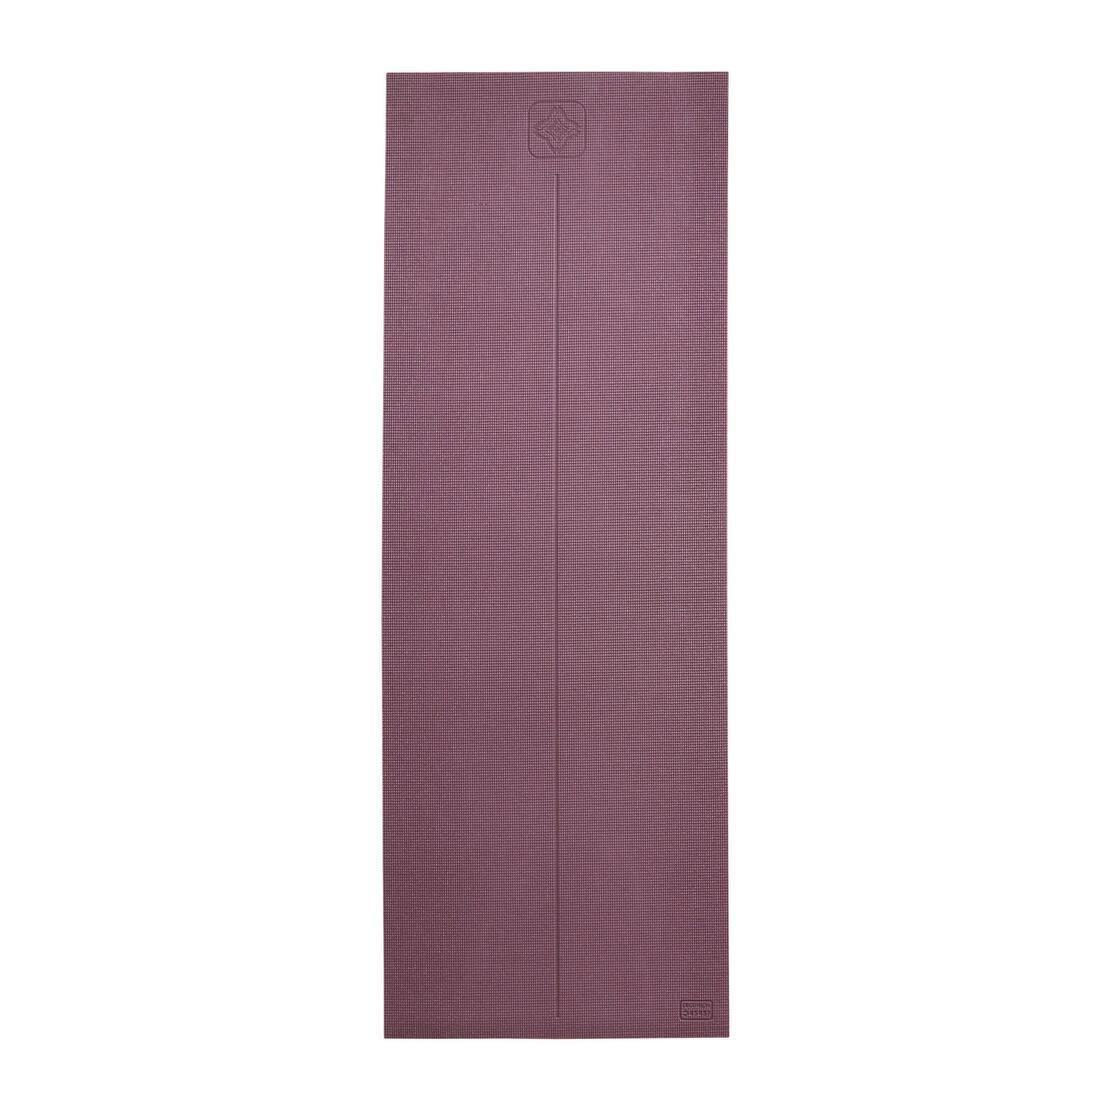 KIMJALY - Comfort Yoga Mat, Jungle Green